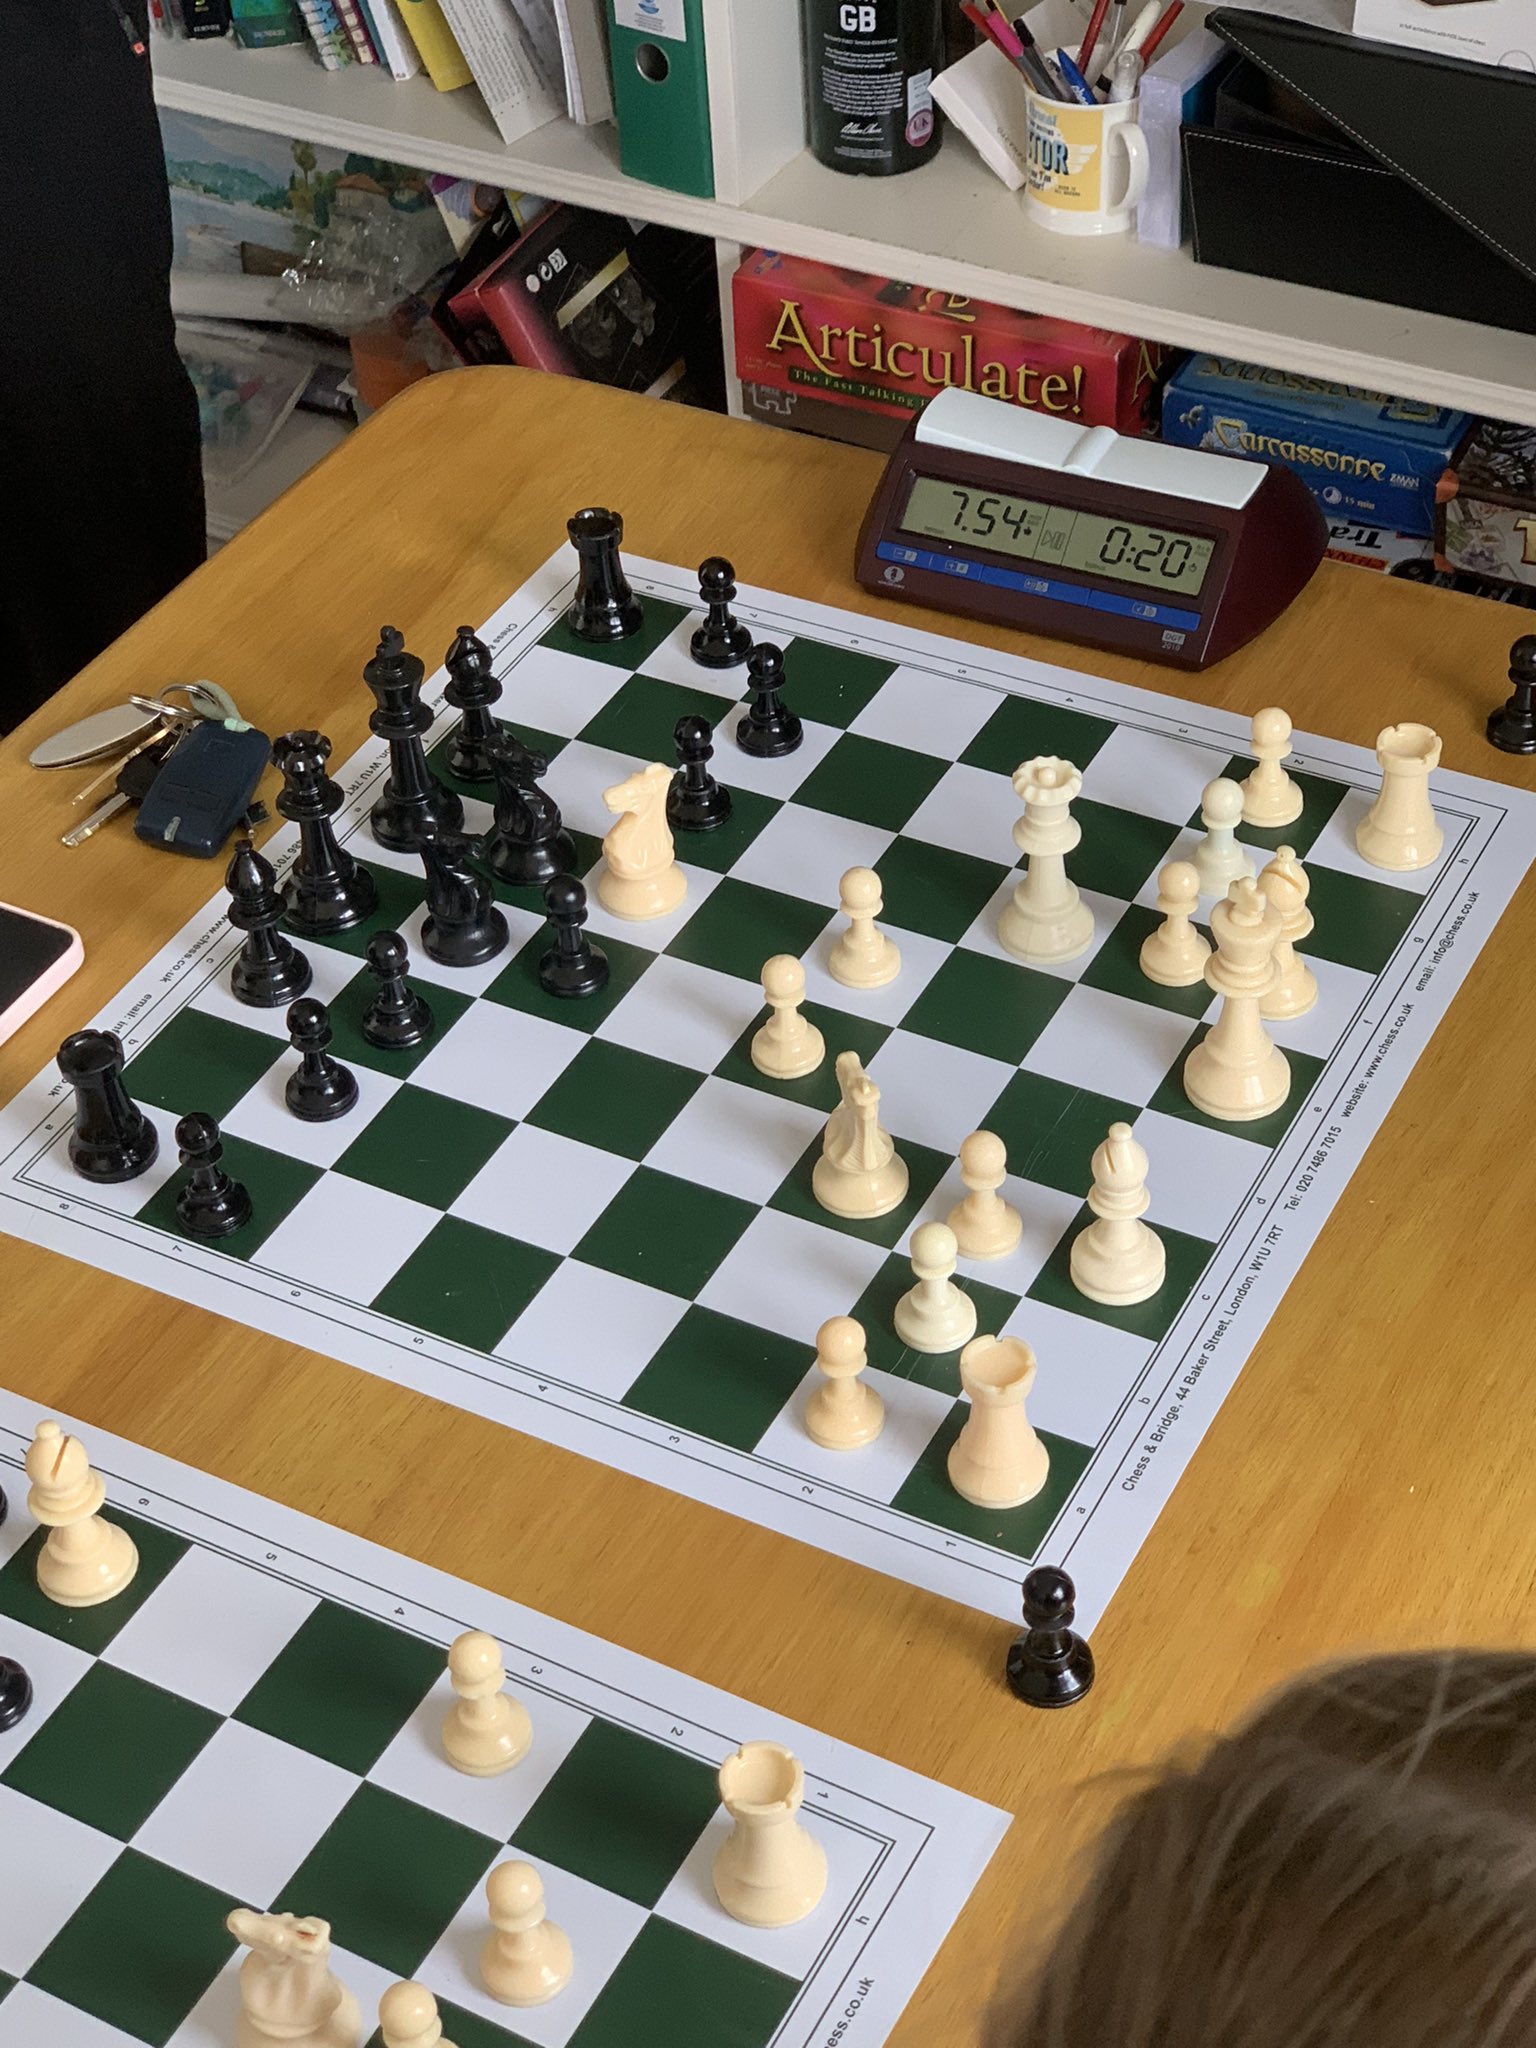 Traxler Counter Attack - The Chess Website